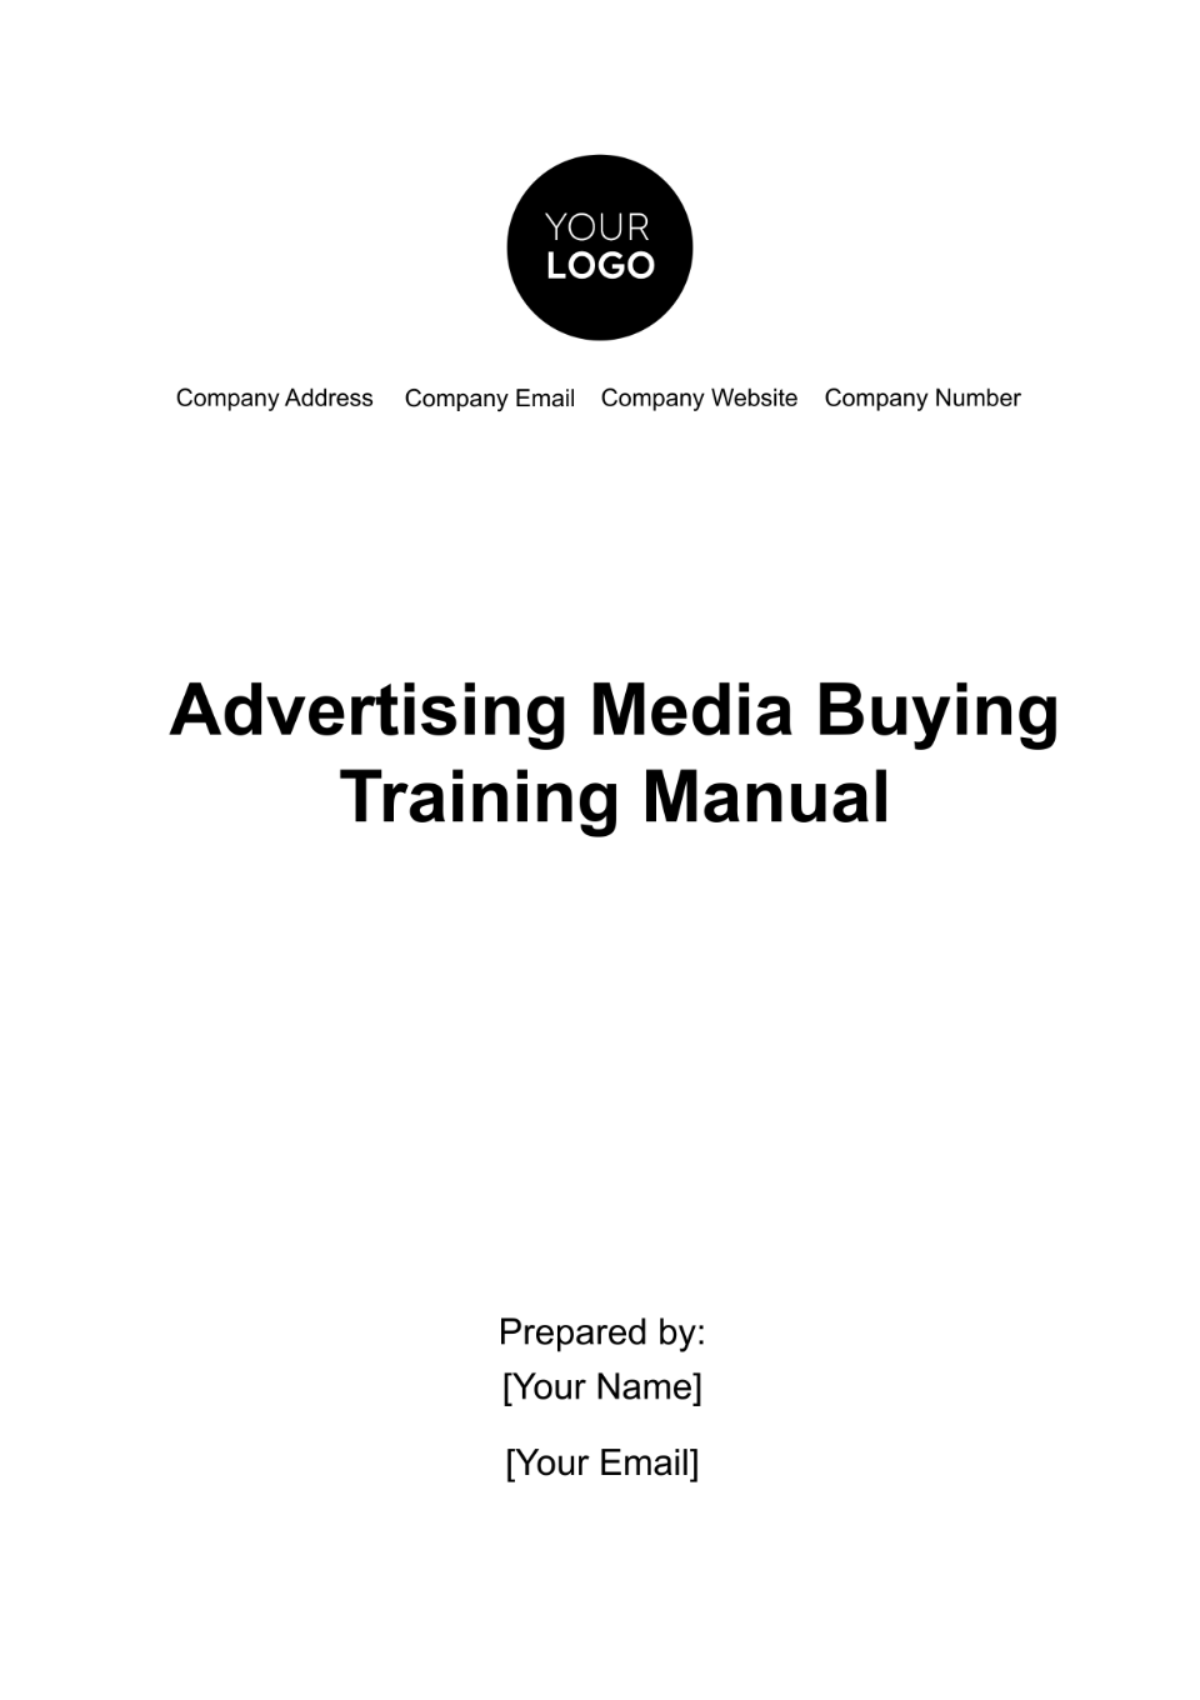 Free Advertising Media Buying Training Manual Template